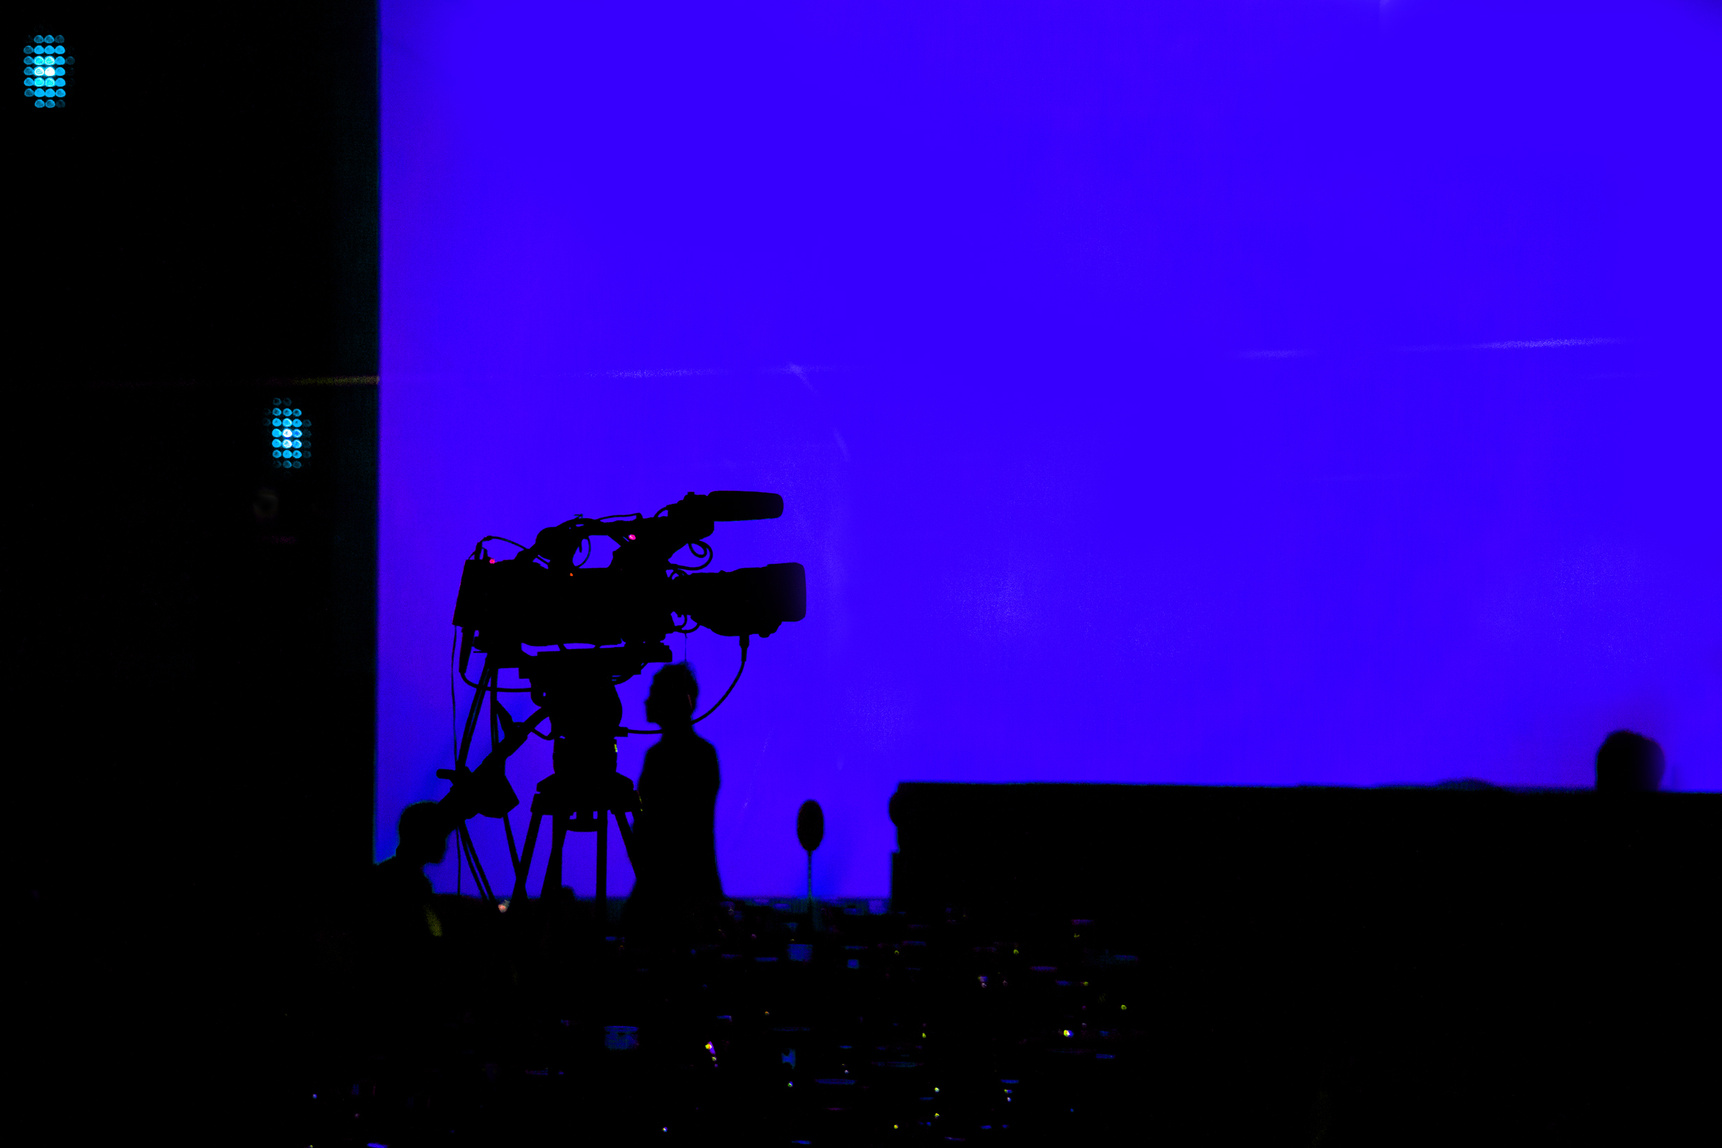 The silhouette camcorder (vdo camera) over blue screen